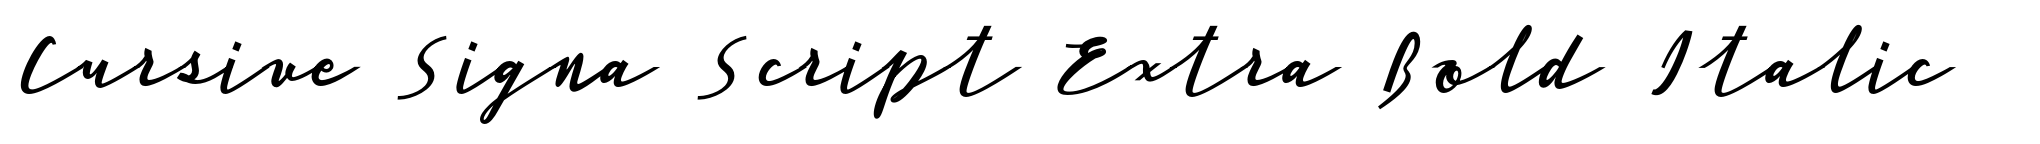 Cursive Signa Script Extra Bold Italic image